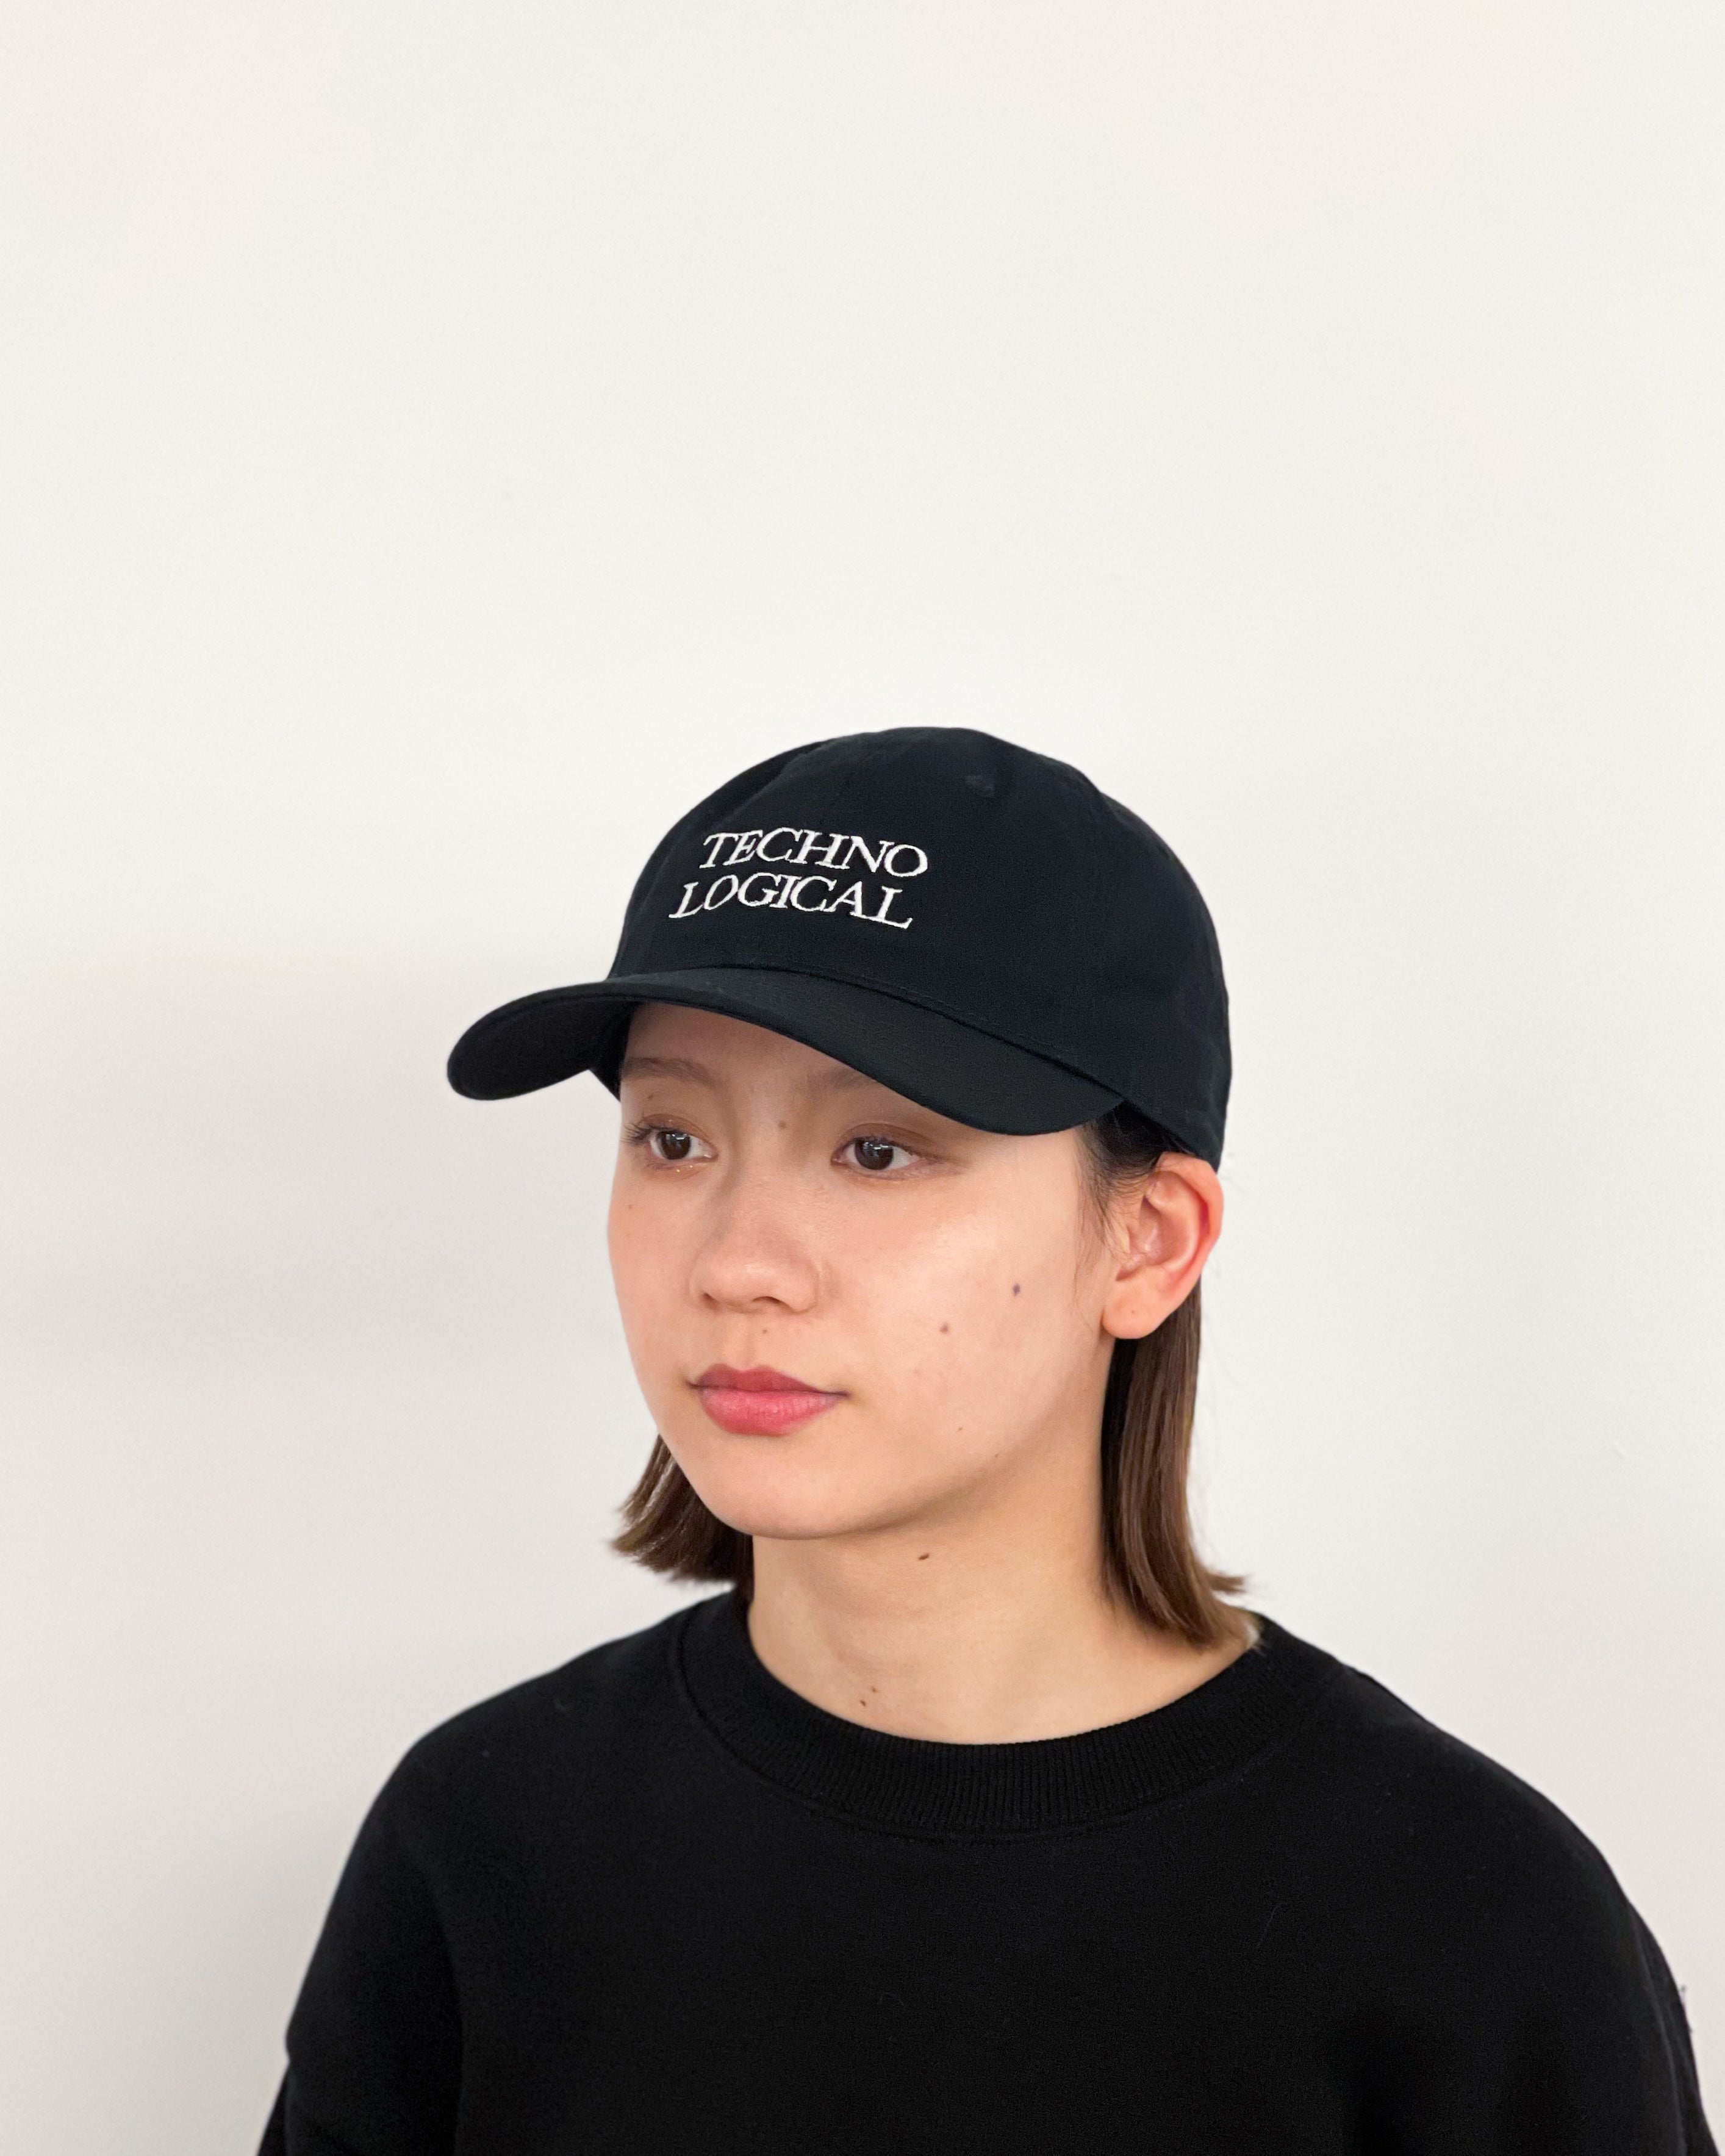 【IDEA】 TECHNO LOGICAL HAT - BLACK